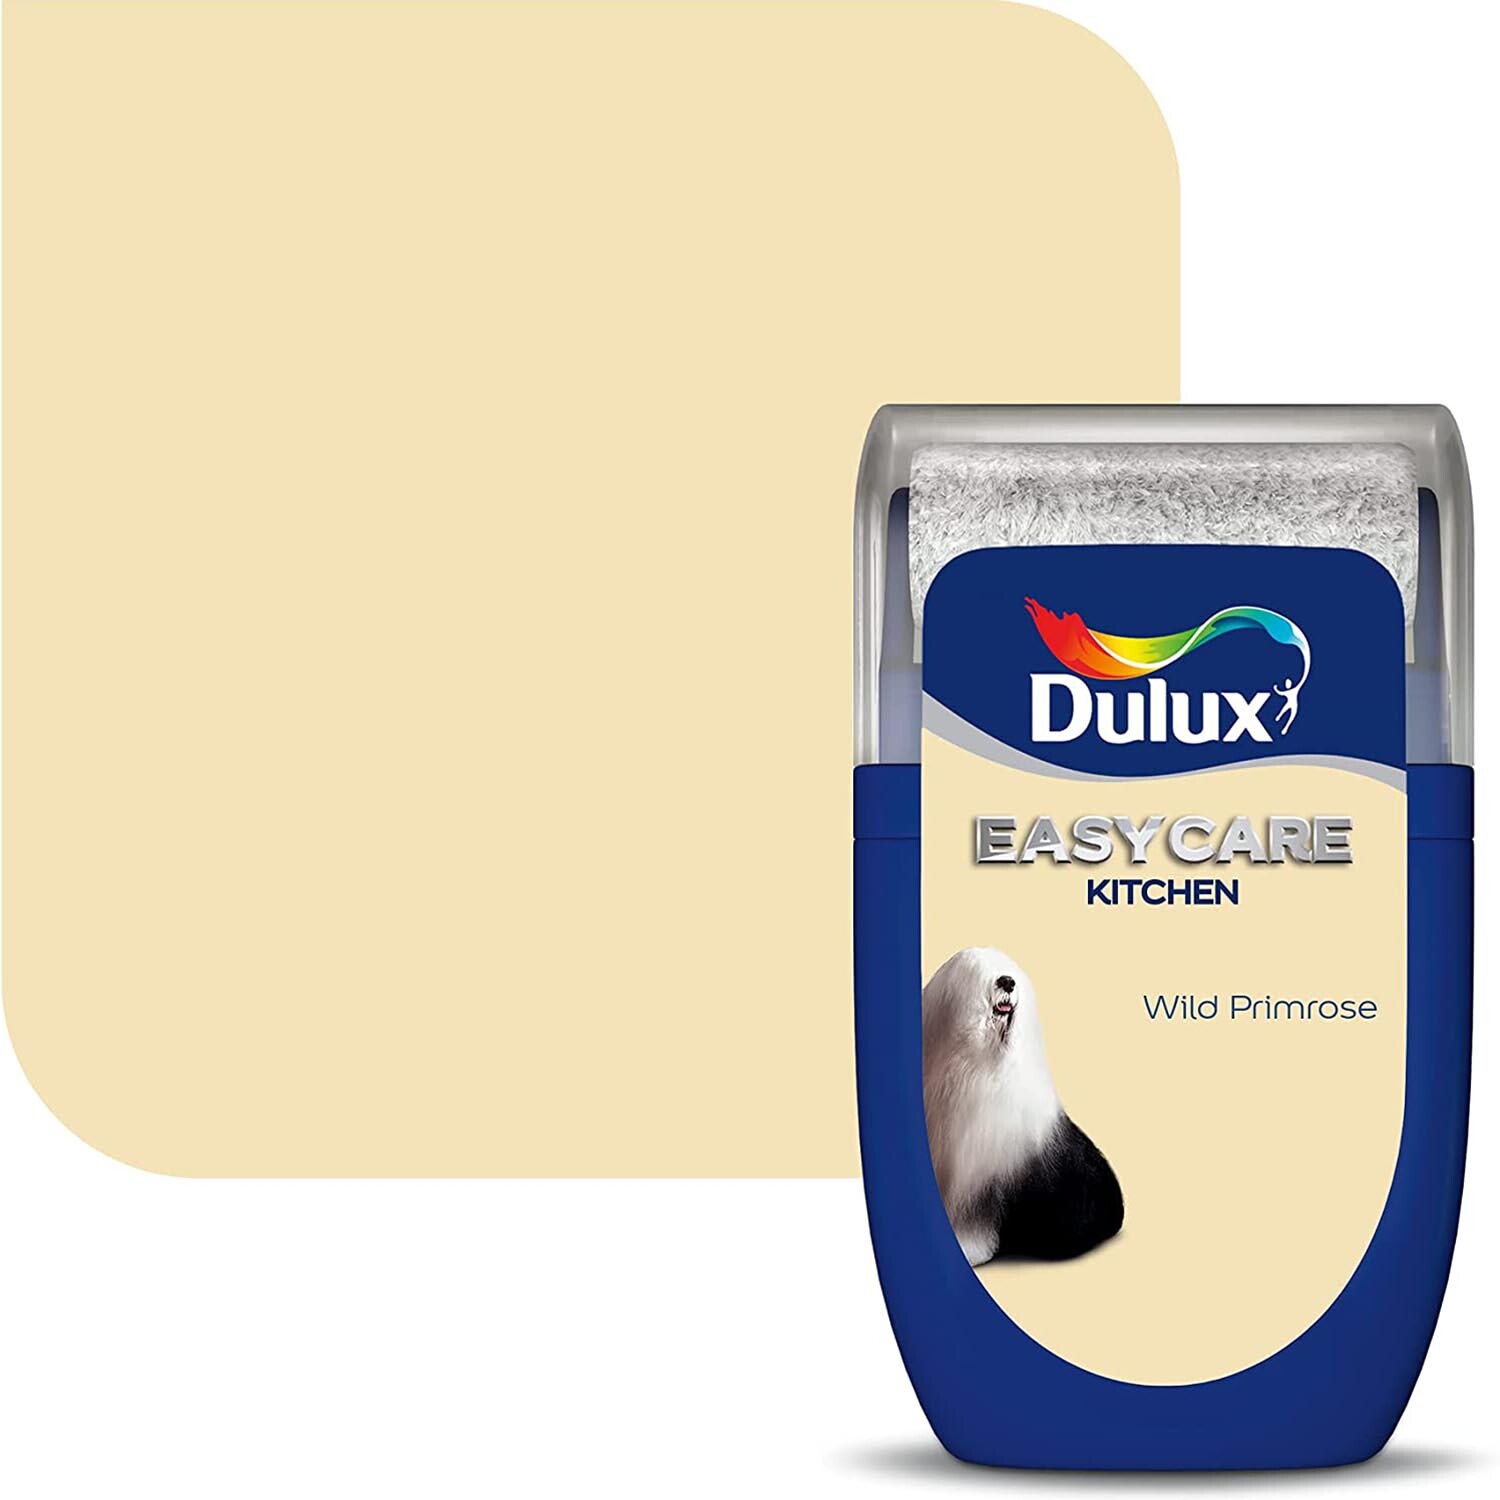 Dulux Easycare Kitchen Wild Primrose Tester Pot 75ml Image 2